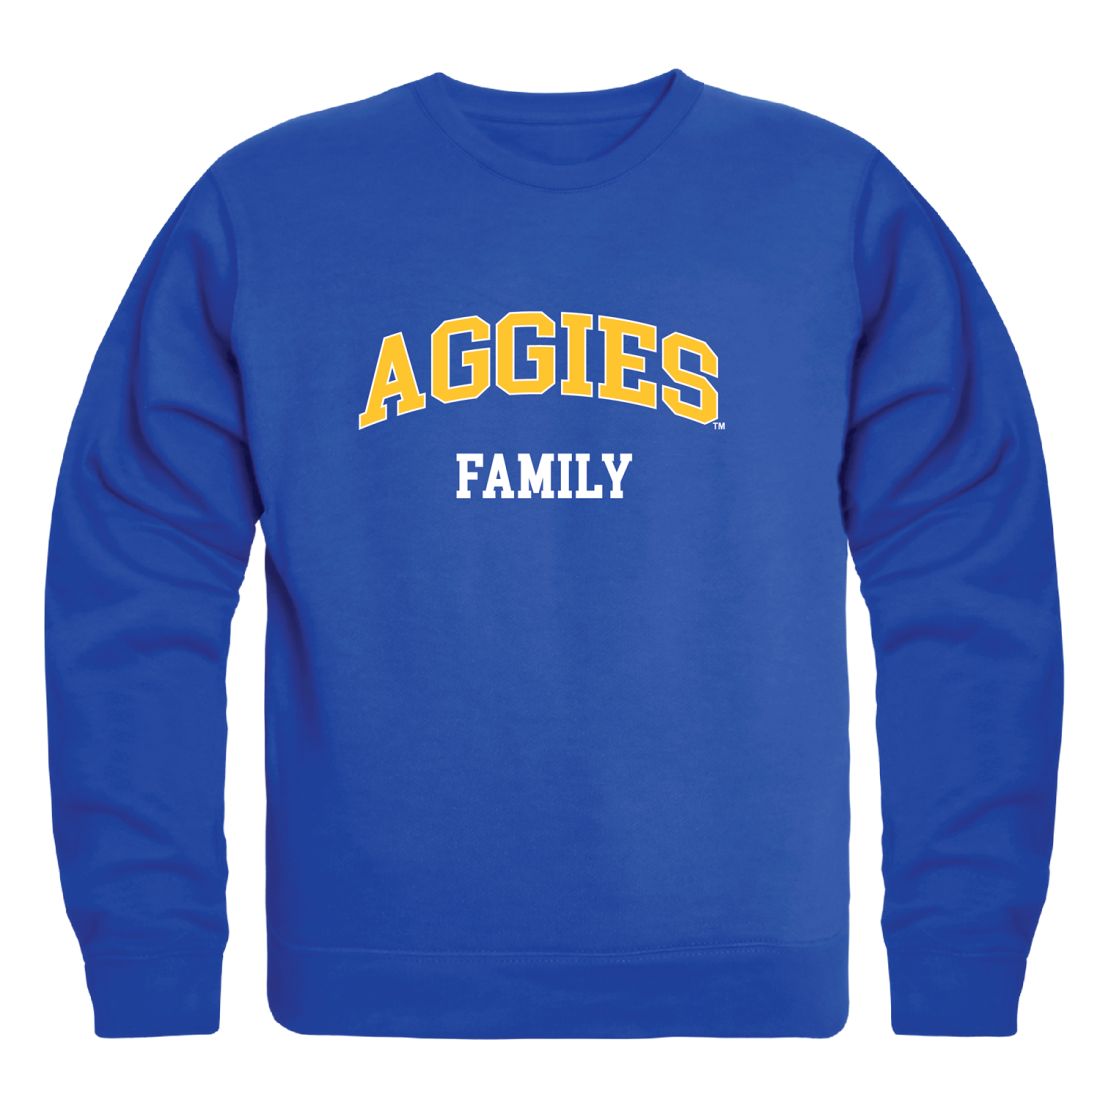 North-Carolina-A&T-State-University-Aggies-Family-Fleece-Crewneck-Pullover-Sweatshirt